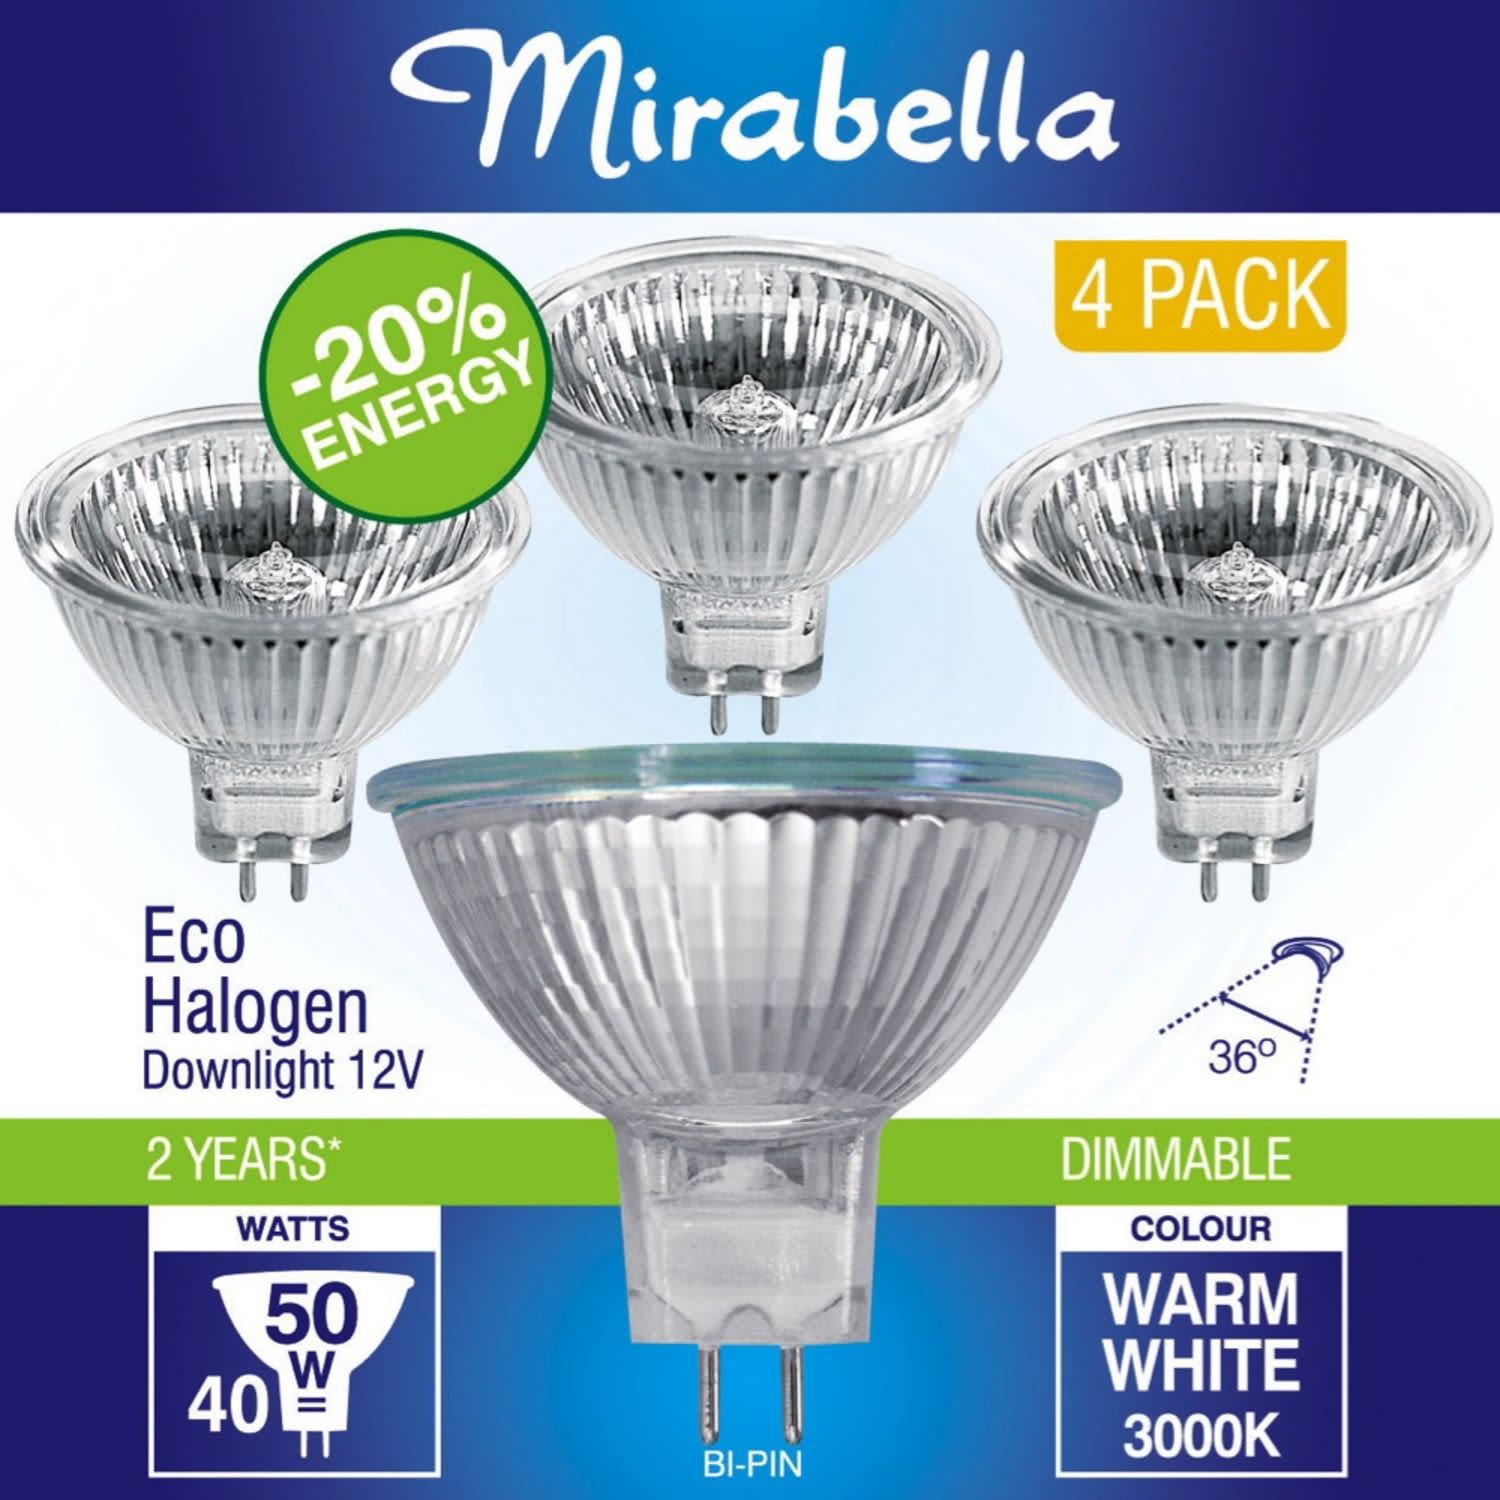 Mirabella Eco Halogen Downlight 35W, 4 Each